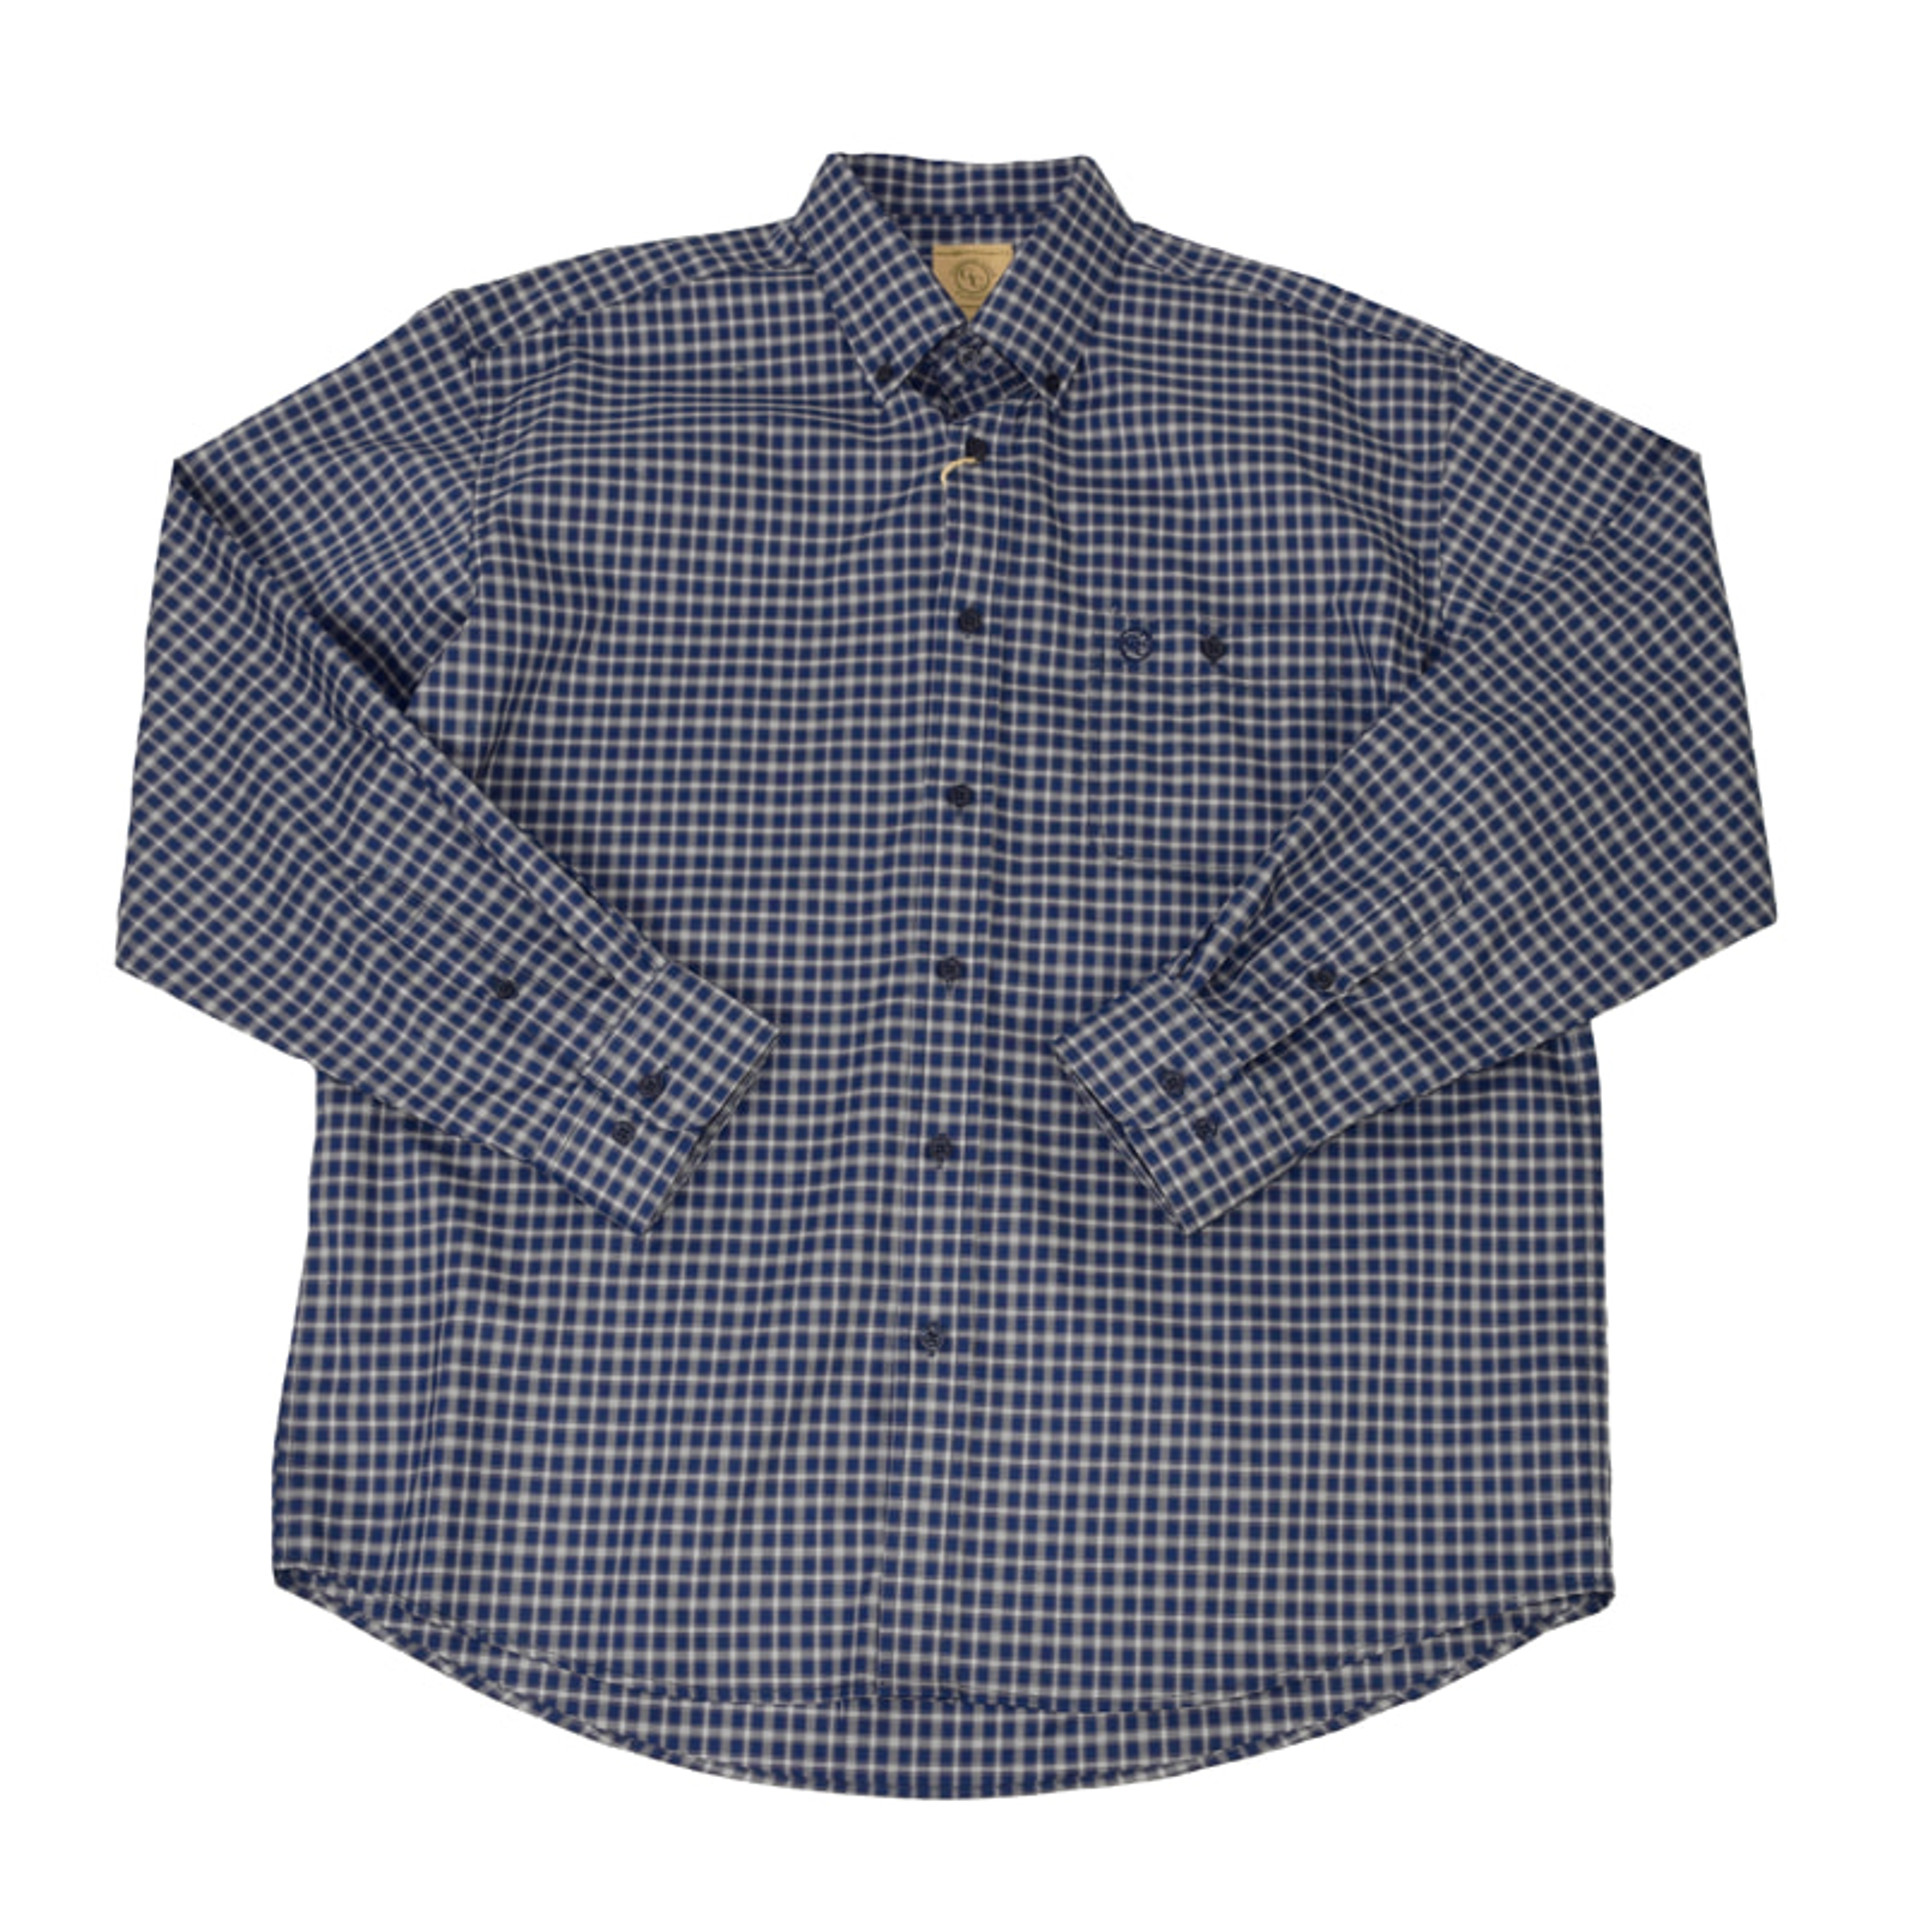 Gunnison Creek Men's Navy/Olive Plaid Long Sleeve Button Up Shirt